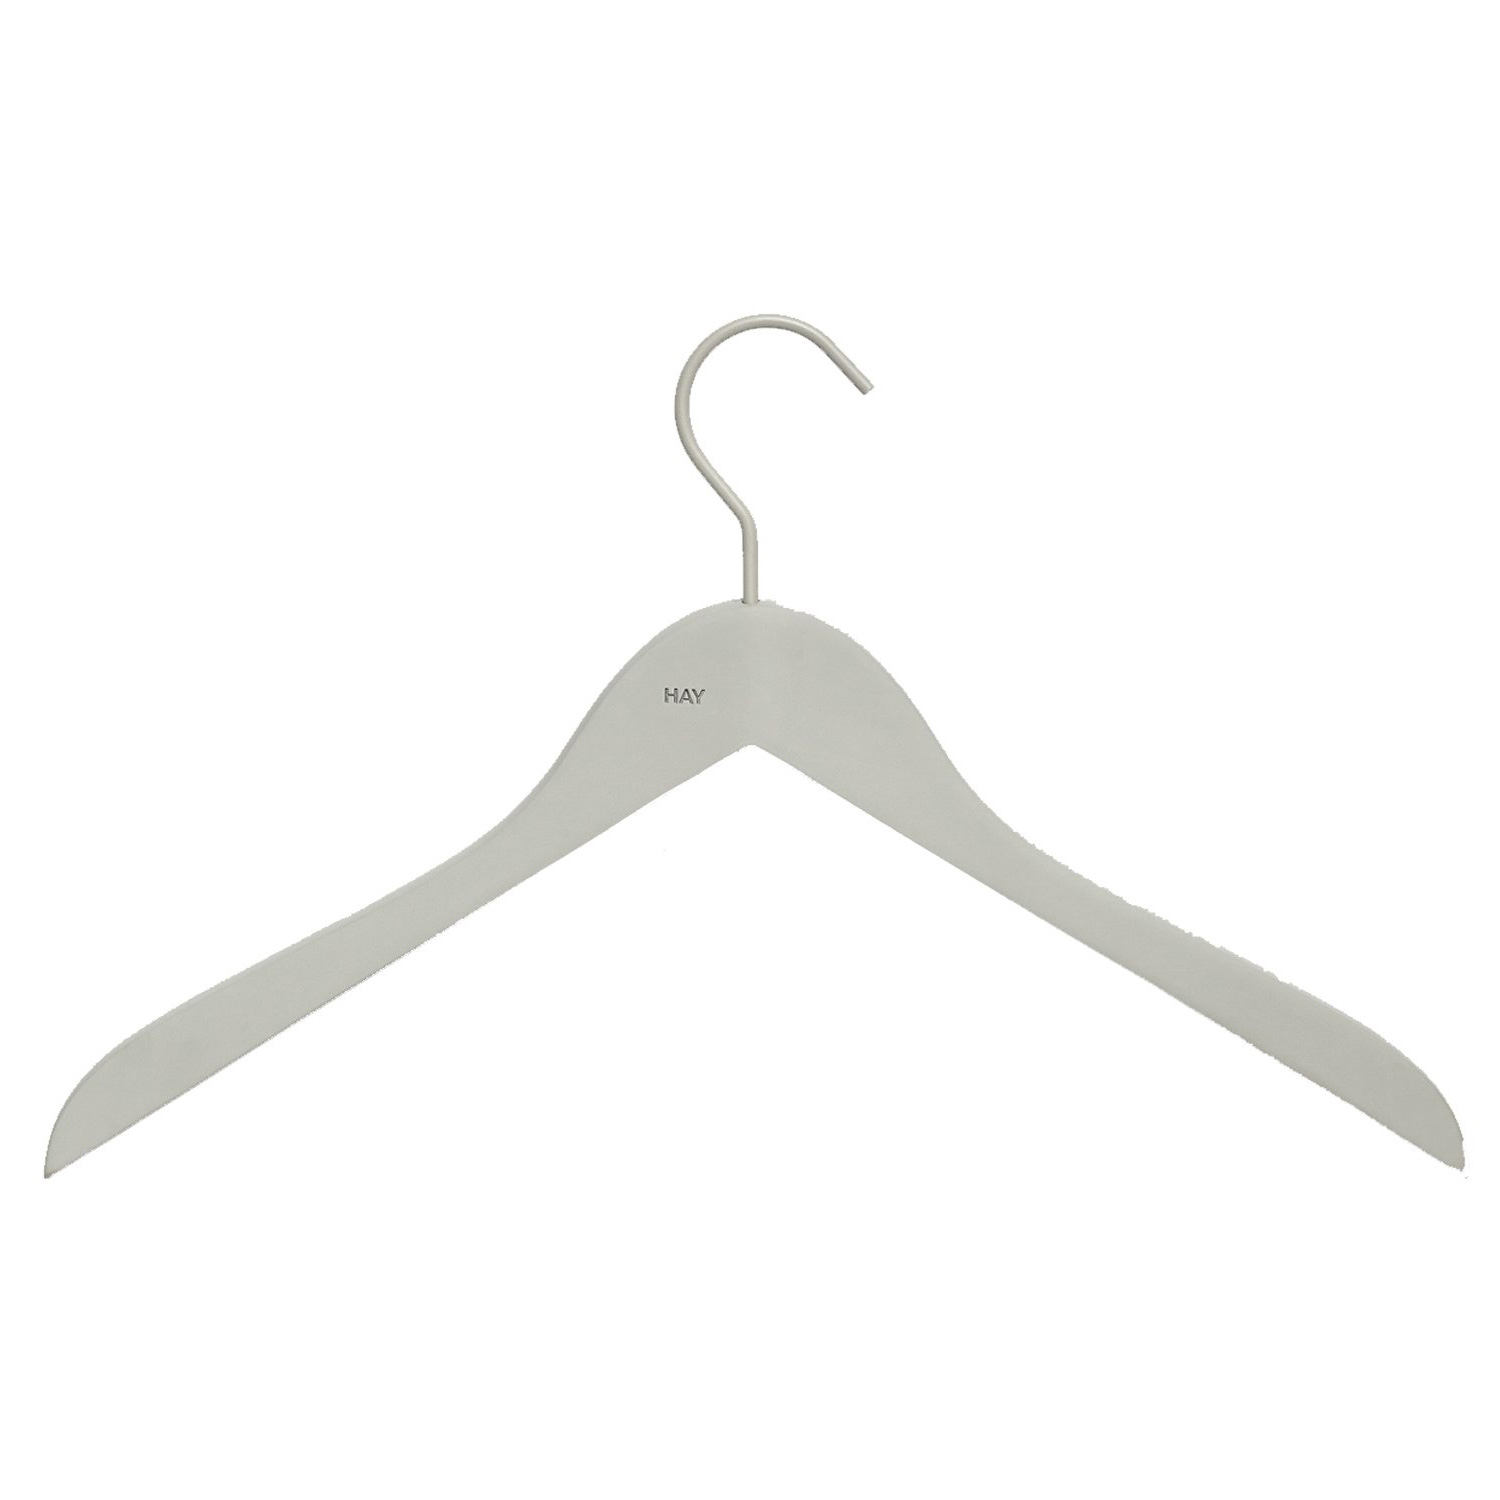 HAY Hang Coat Hangers - 5 Pack Black